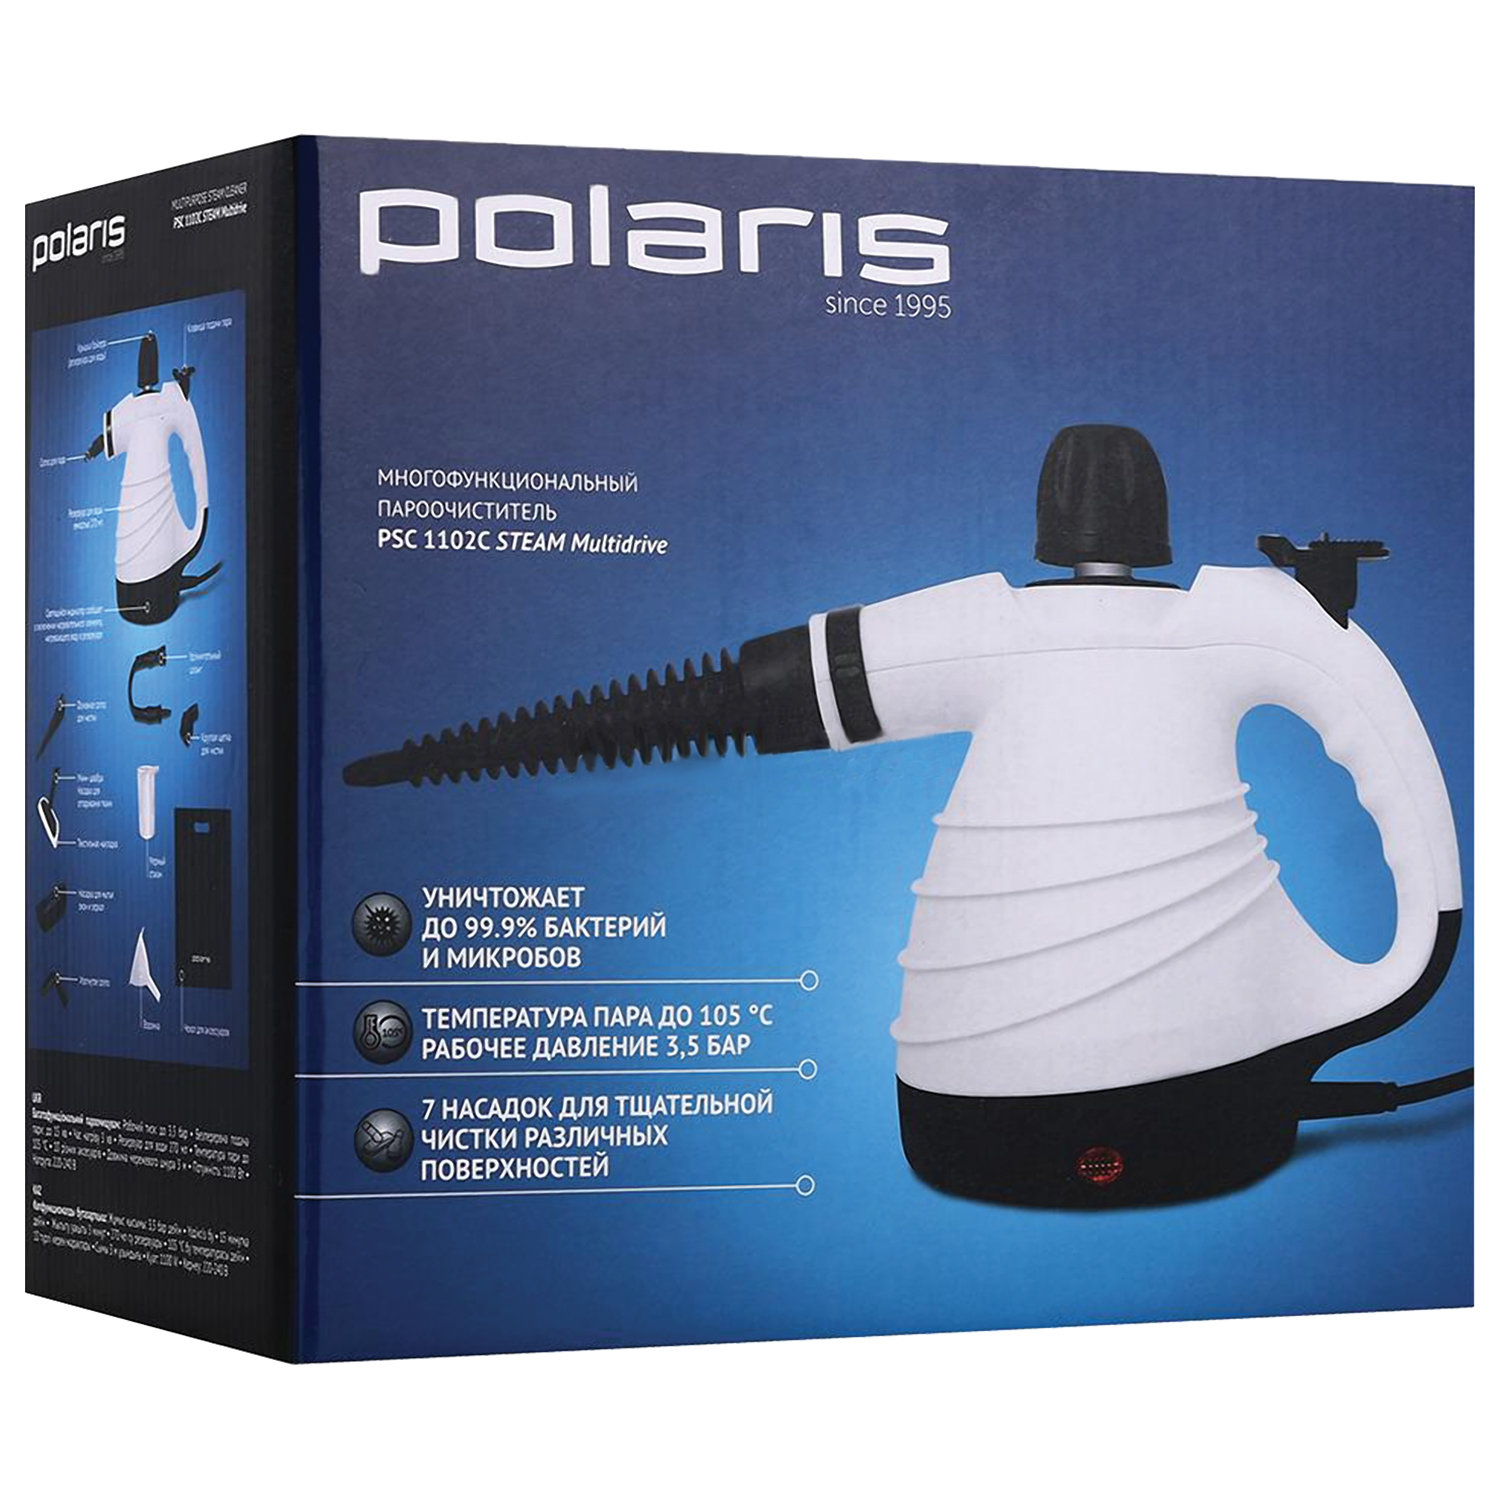 Polaris psc 1102c steam multidrive белый фото 8